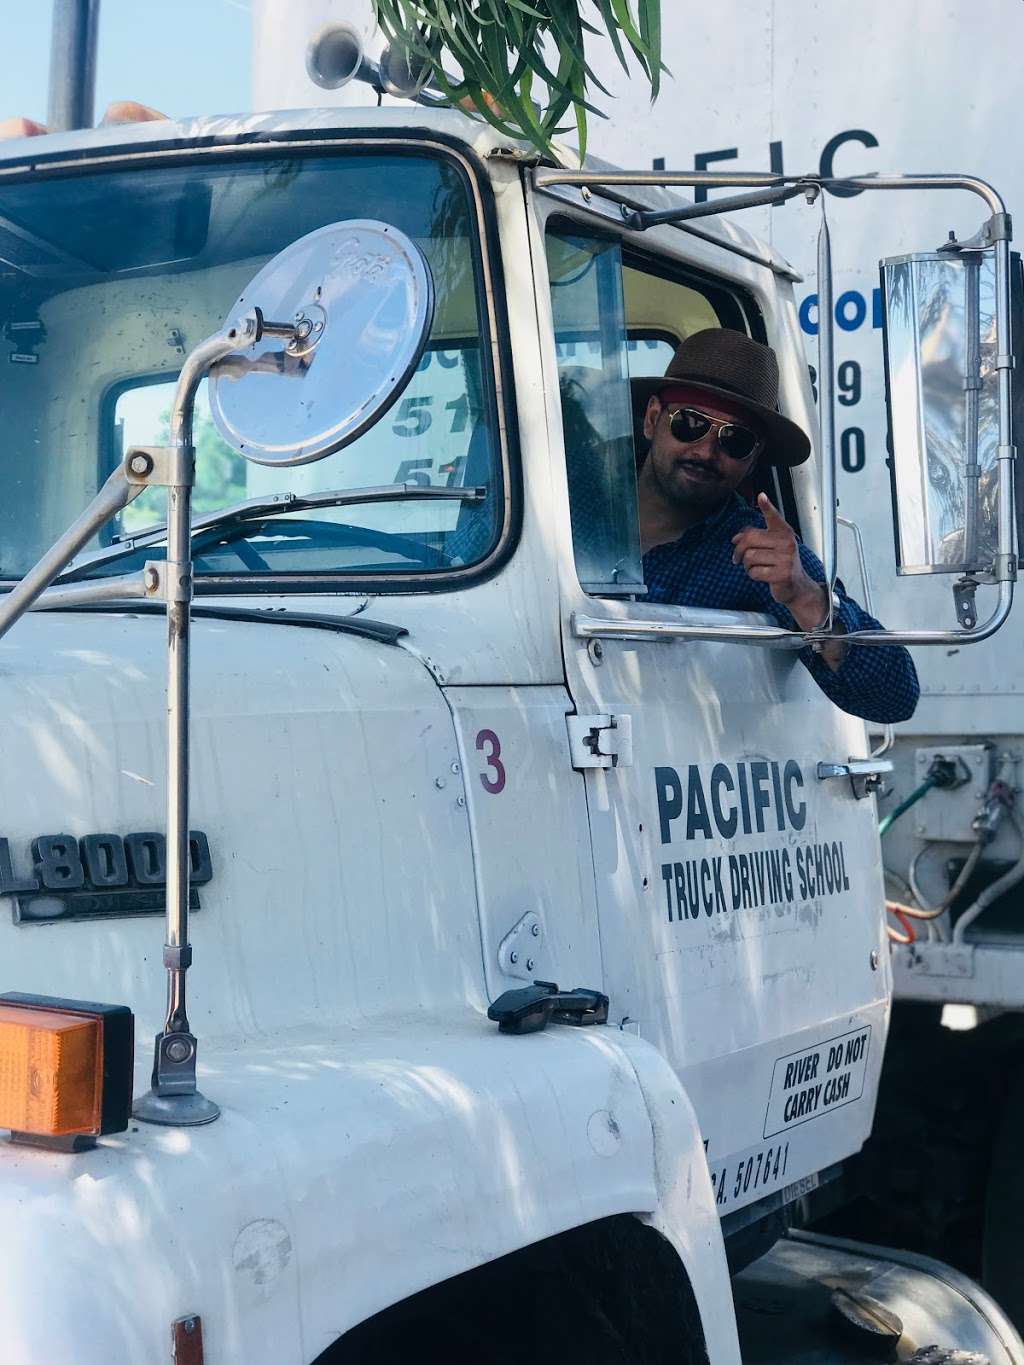 Pacific Truck Driving School | 3890 Depot Rd, Hayward, CA 94545 | Phone: (510) 780-6392